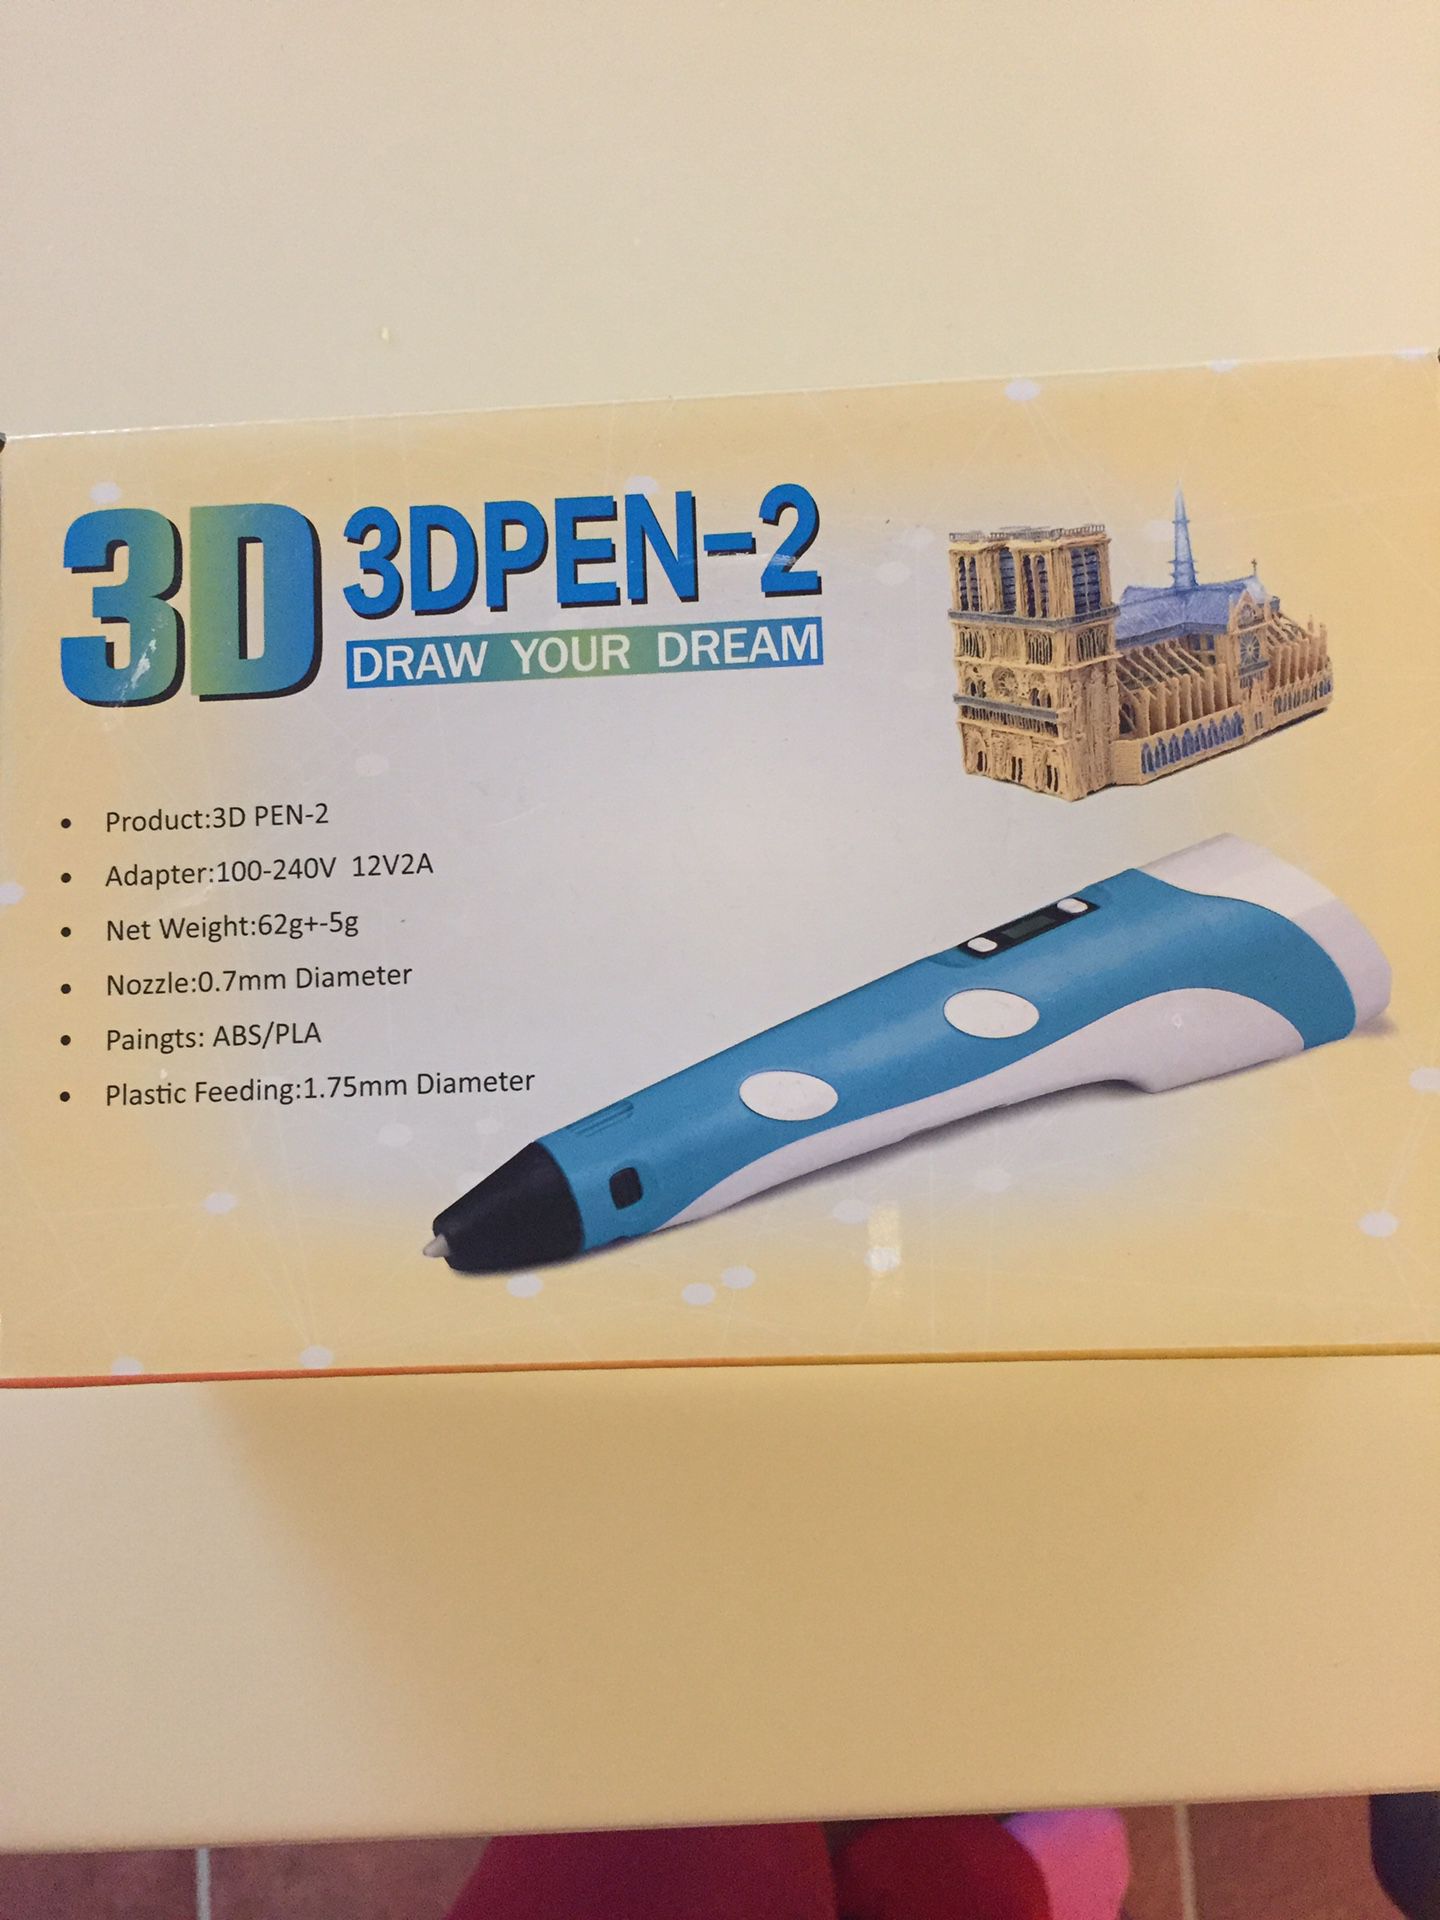 3D Pen- 2 Draw Your Dream!